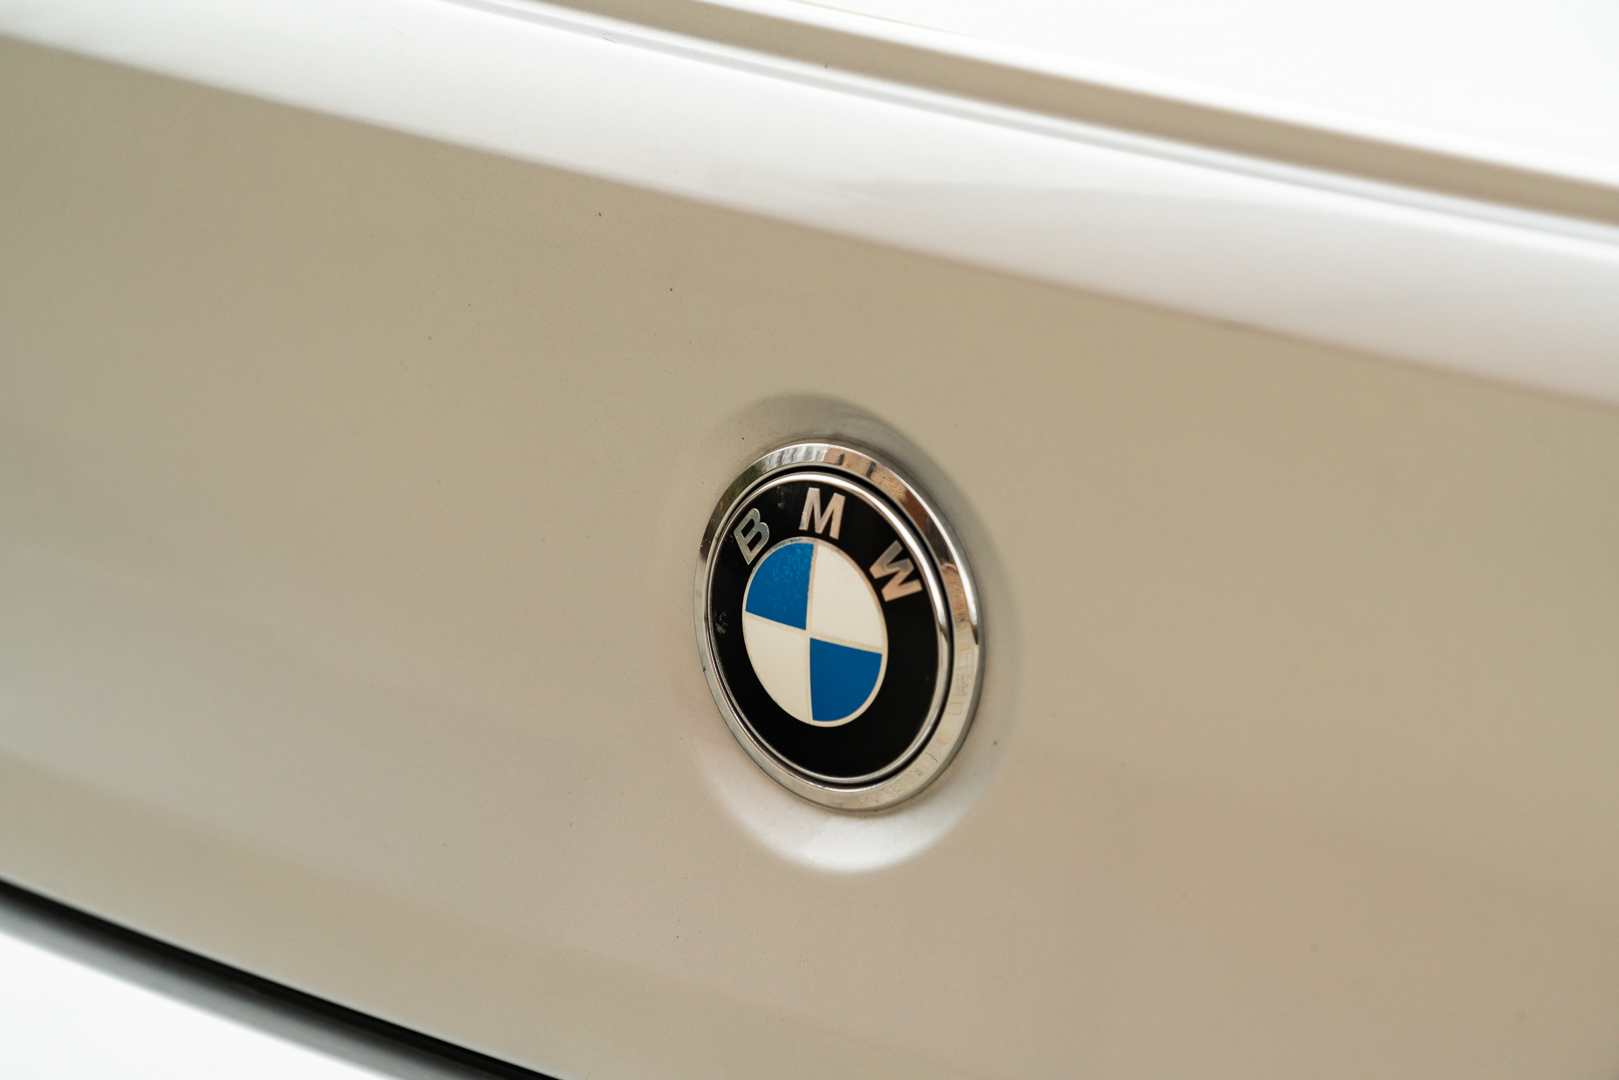 BMW 645 